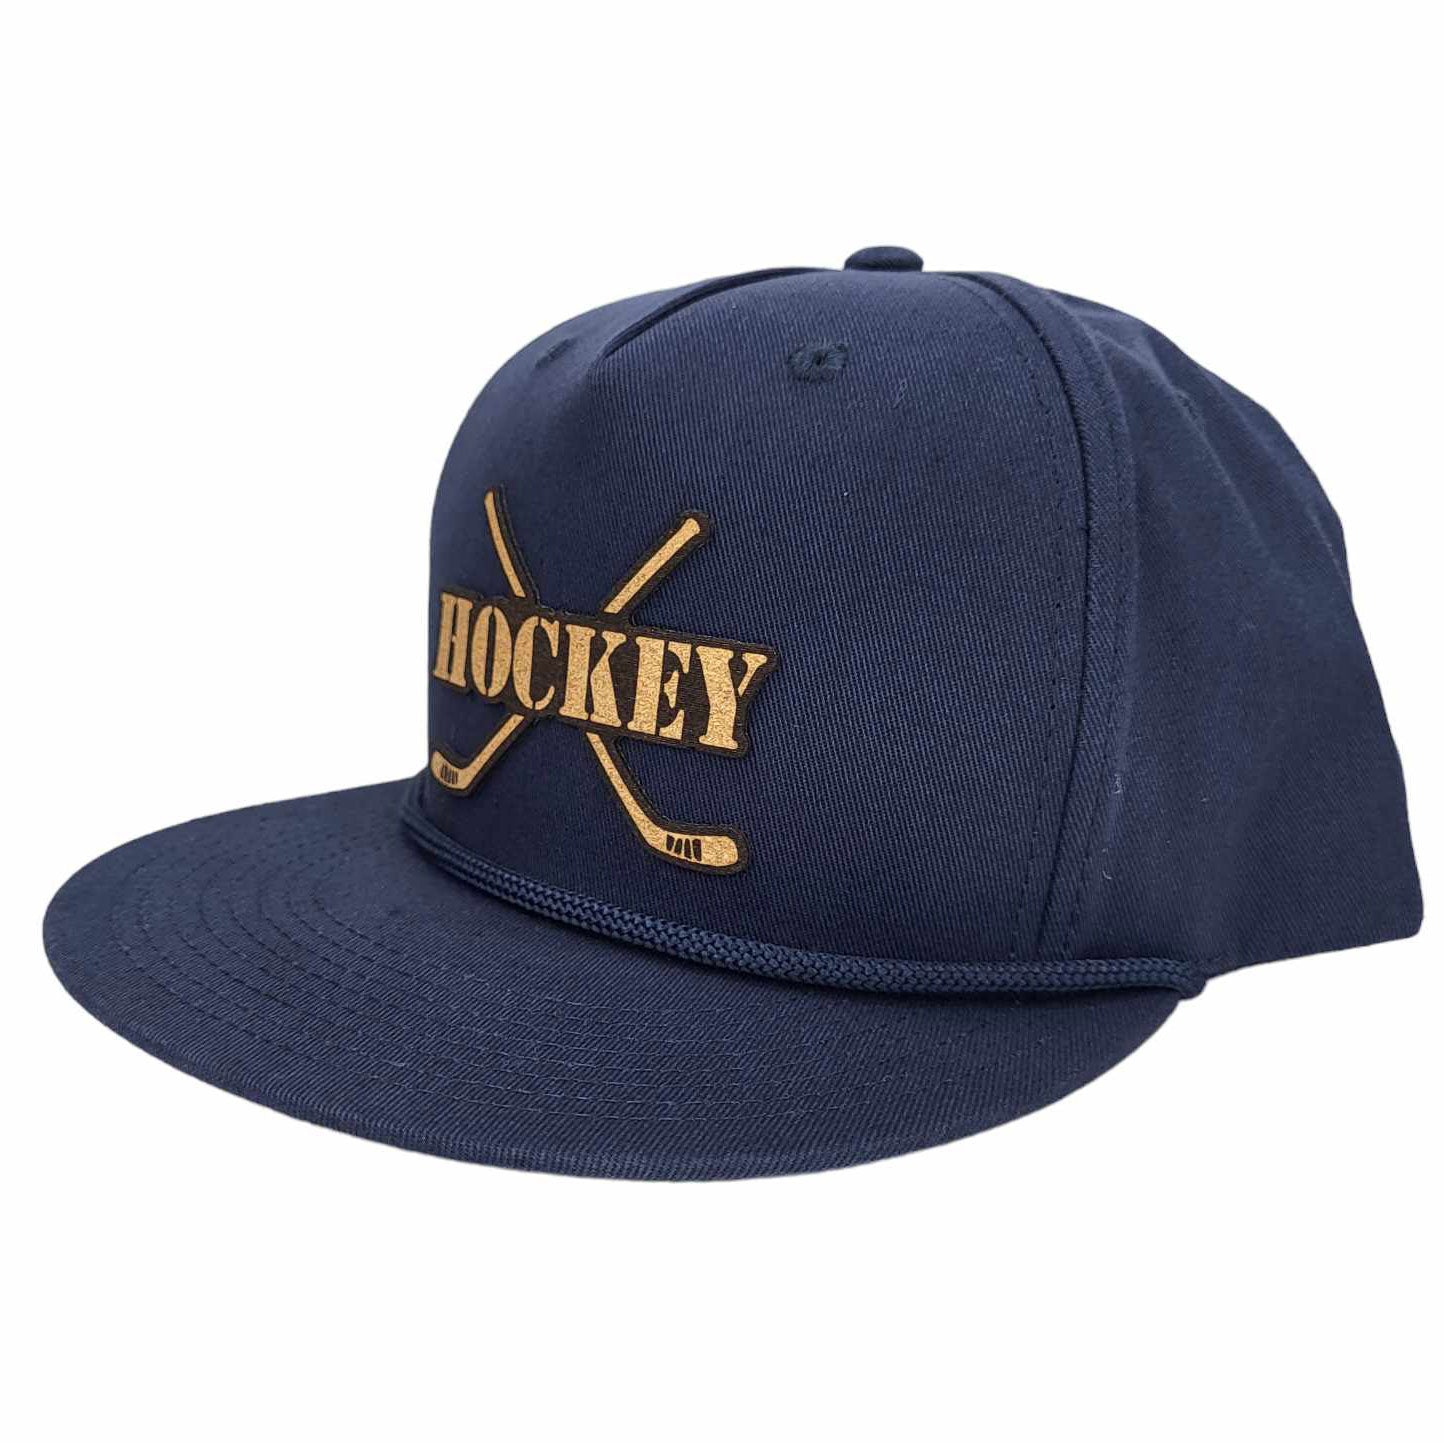 The Hockey Rope Hat